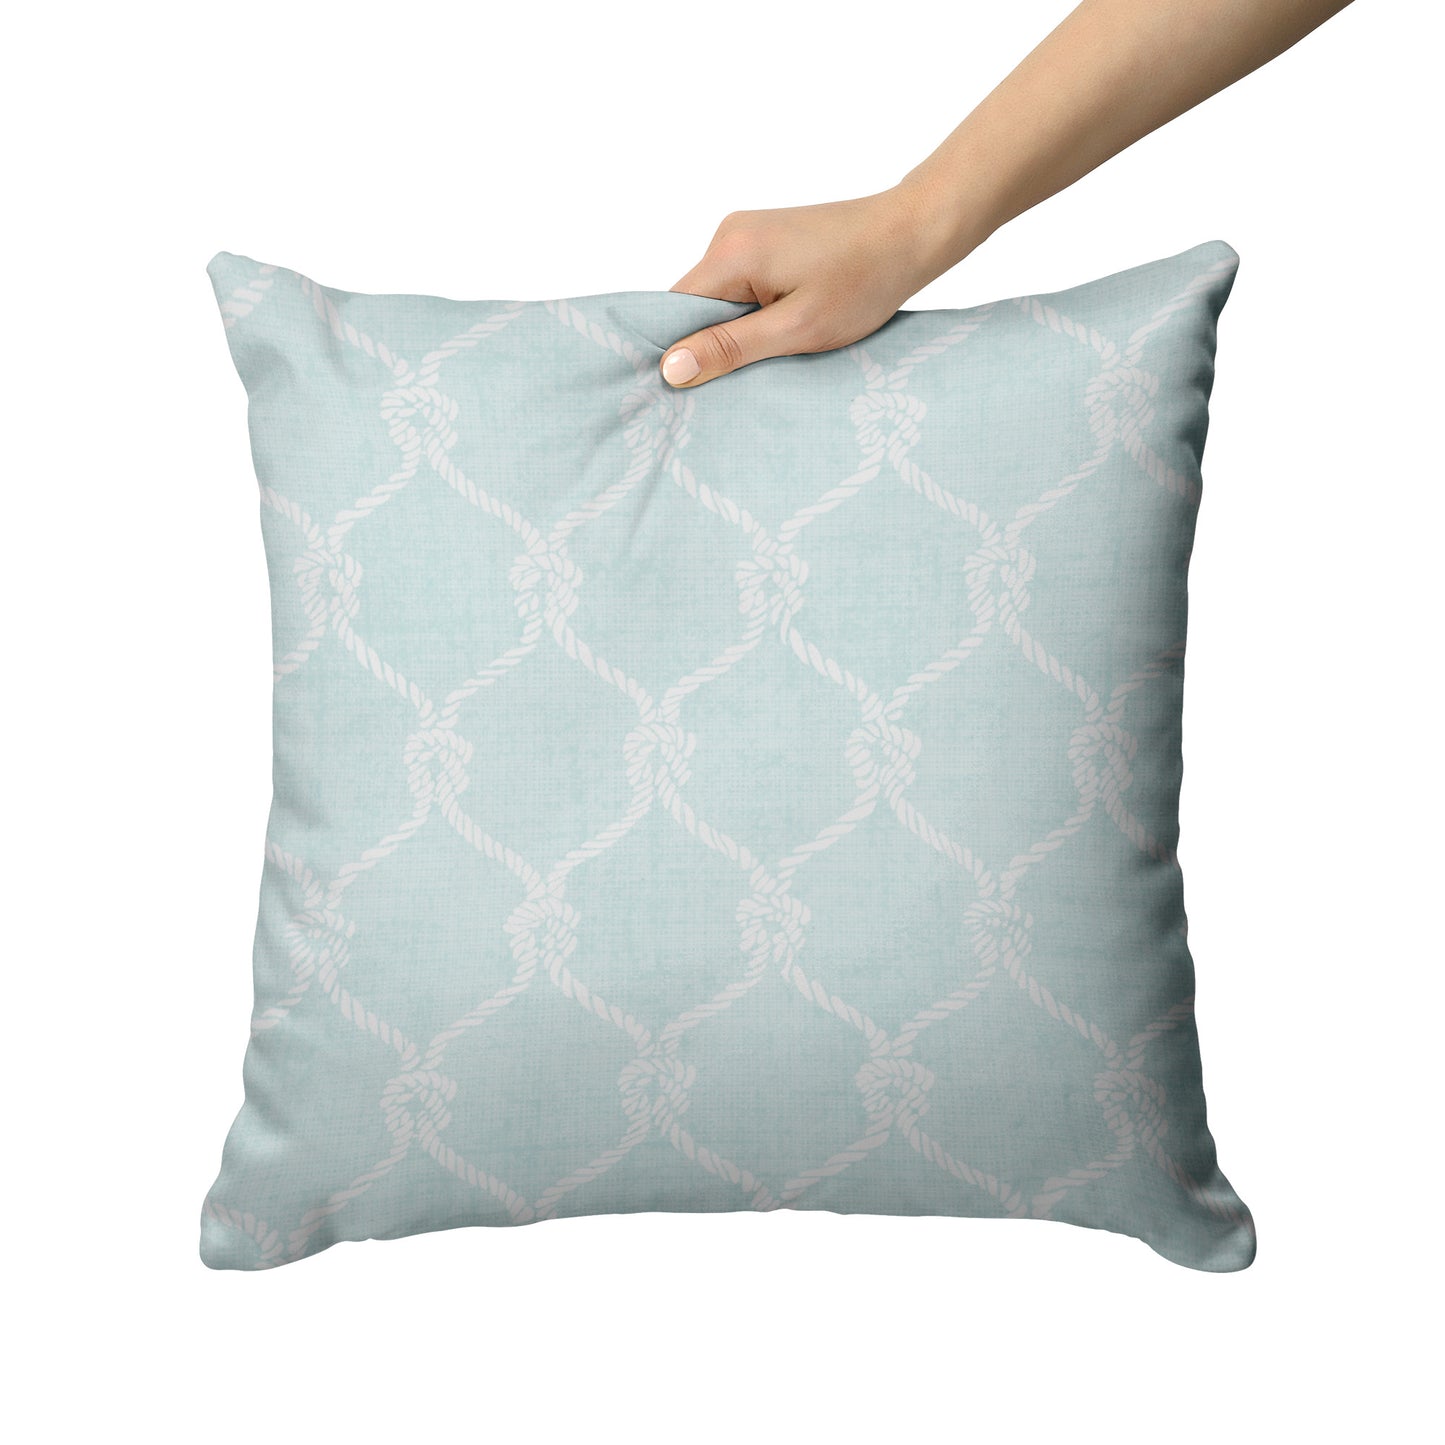 Nautical Netting Design on Mist Linen Textured Background, Throw Pillow